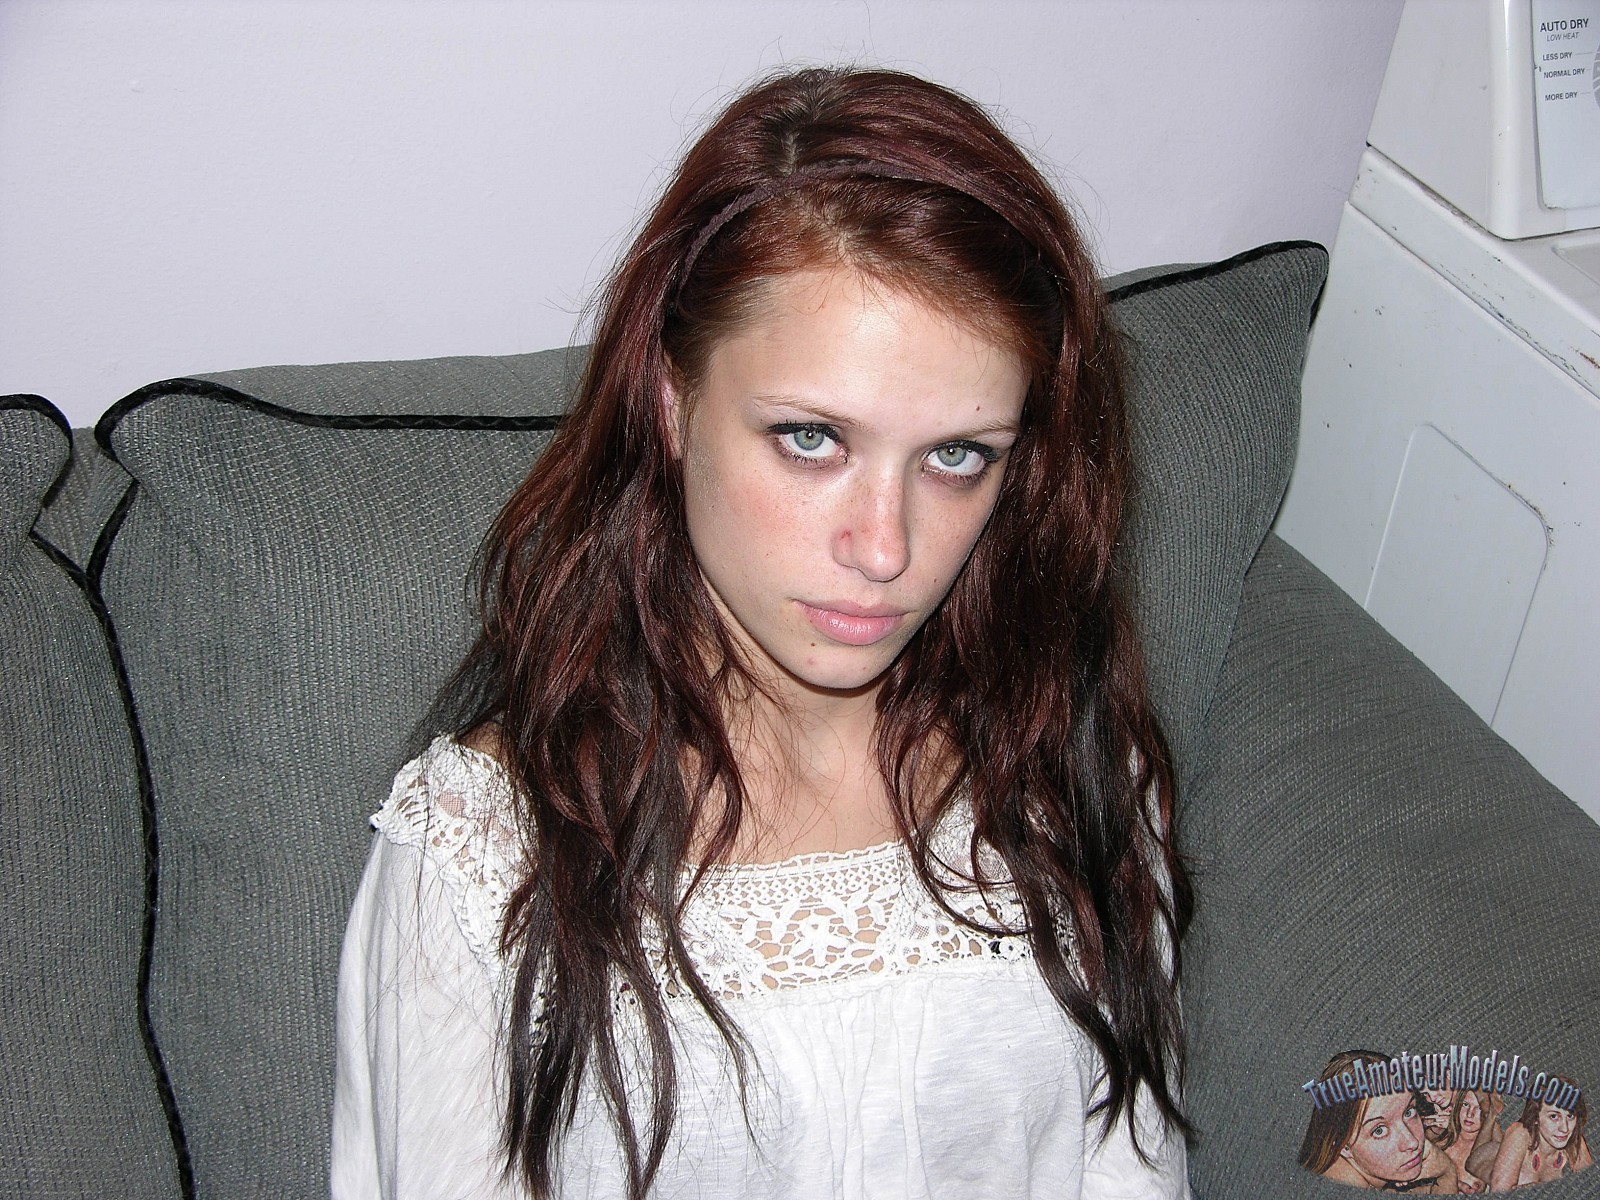 Amateur Redhead Babe From Trueamateurmodels.com  - Jenna Model #67118290